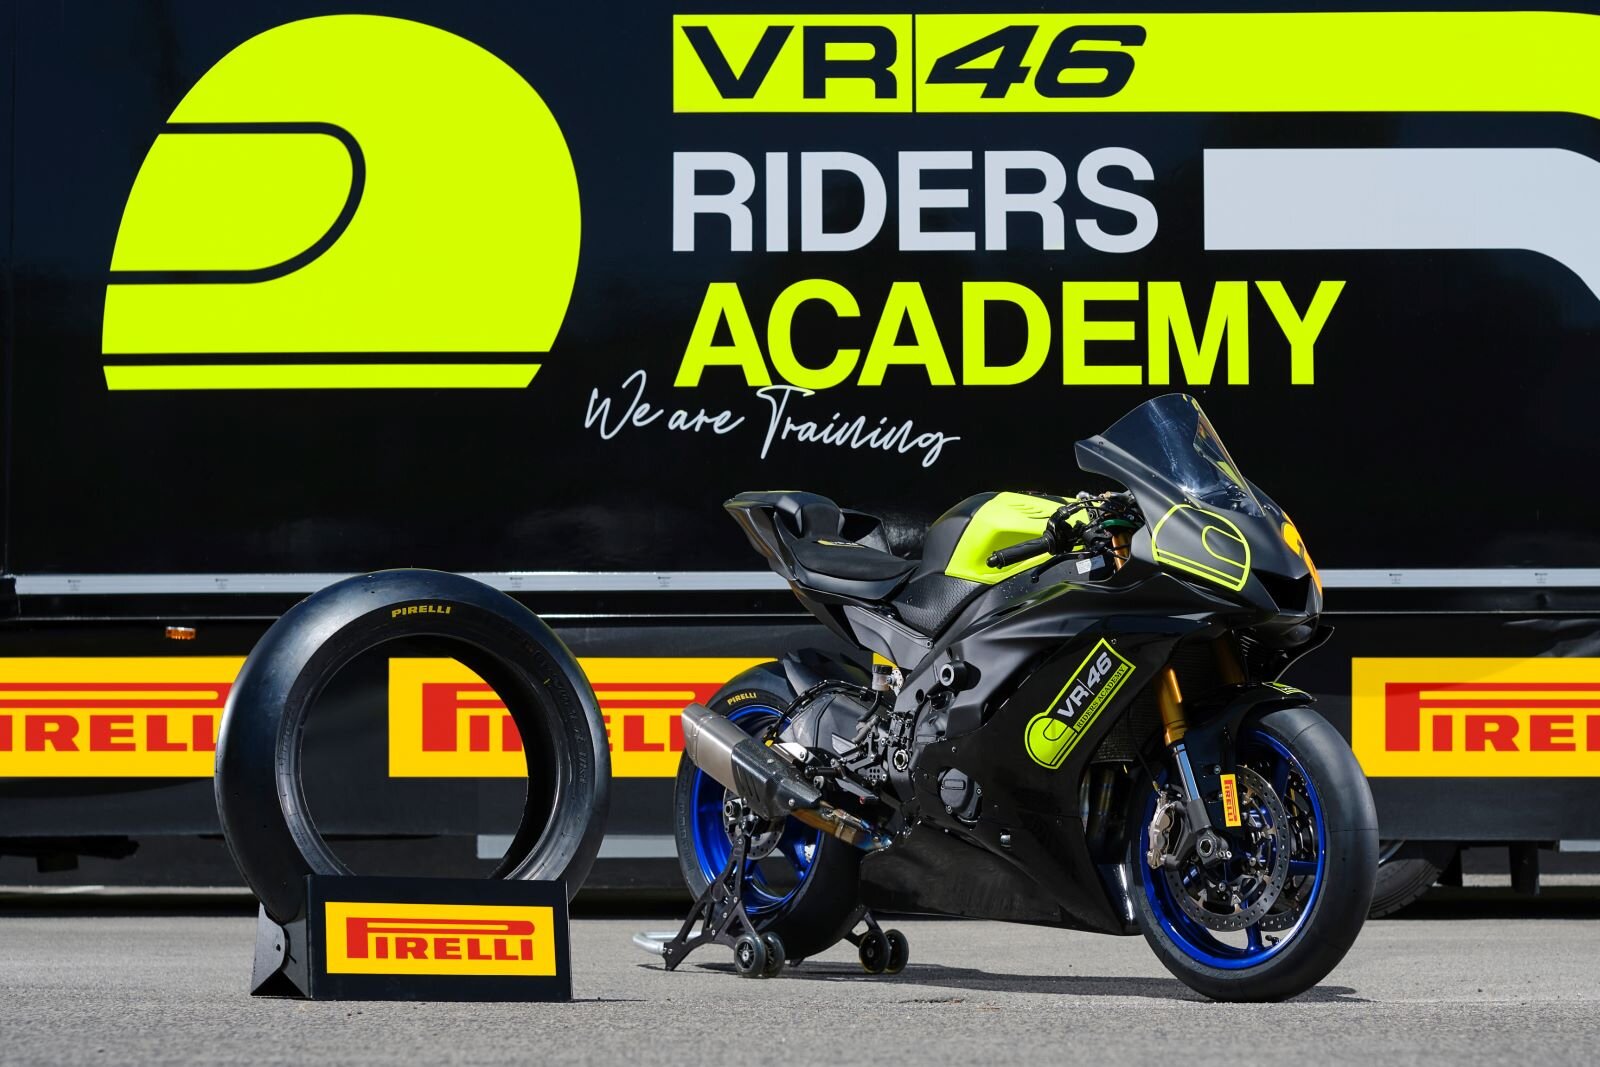 vr46-riders-academy-fleet.jpg